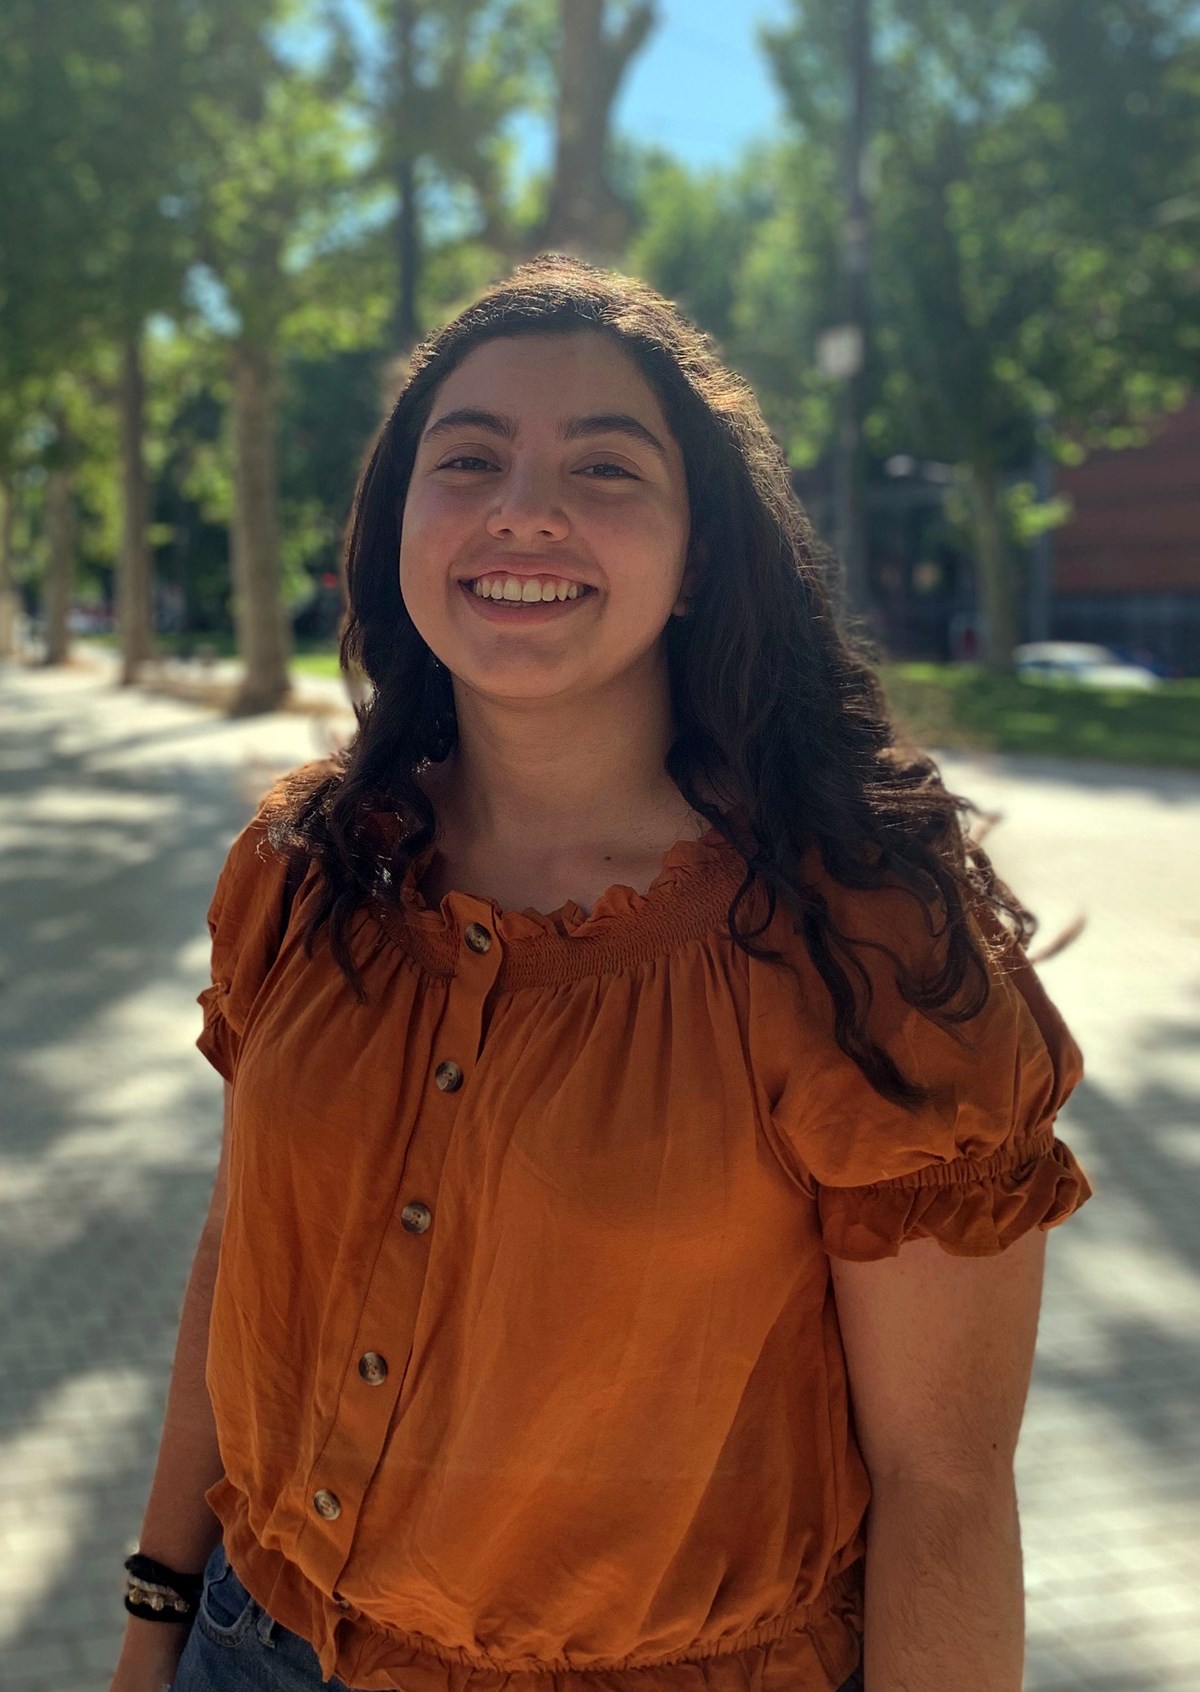 Daniela Salinas Camacho standing outside in an orange shirt smiling at the camera.